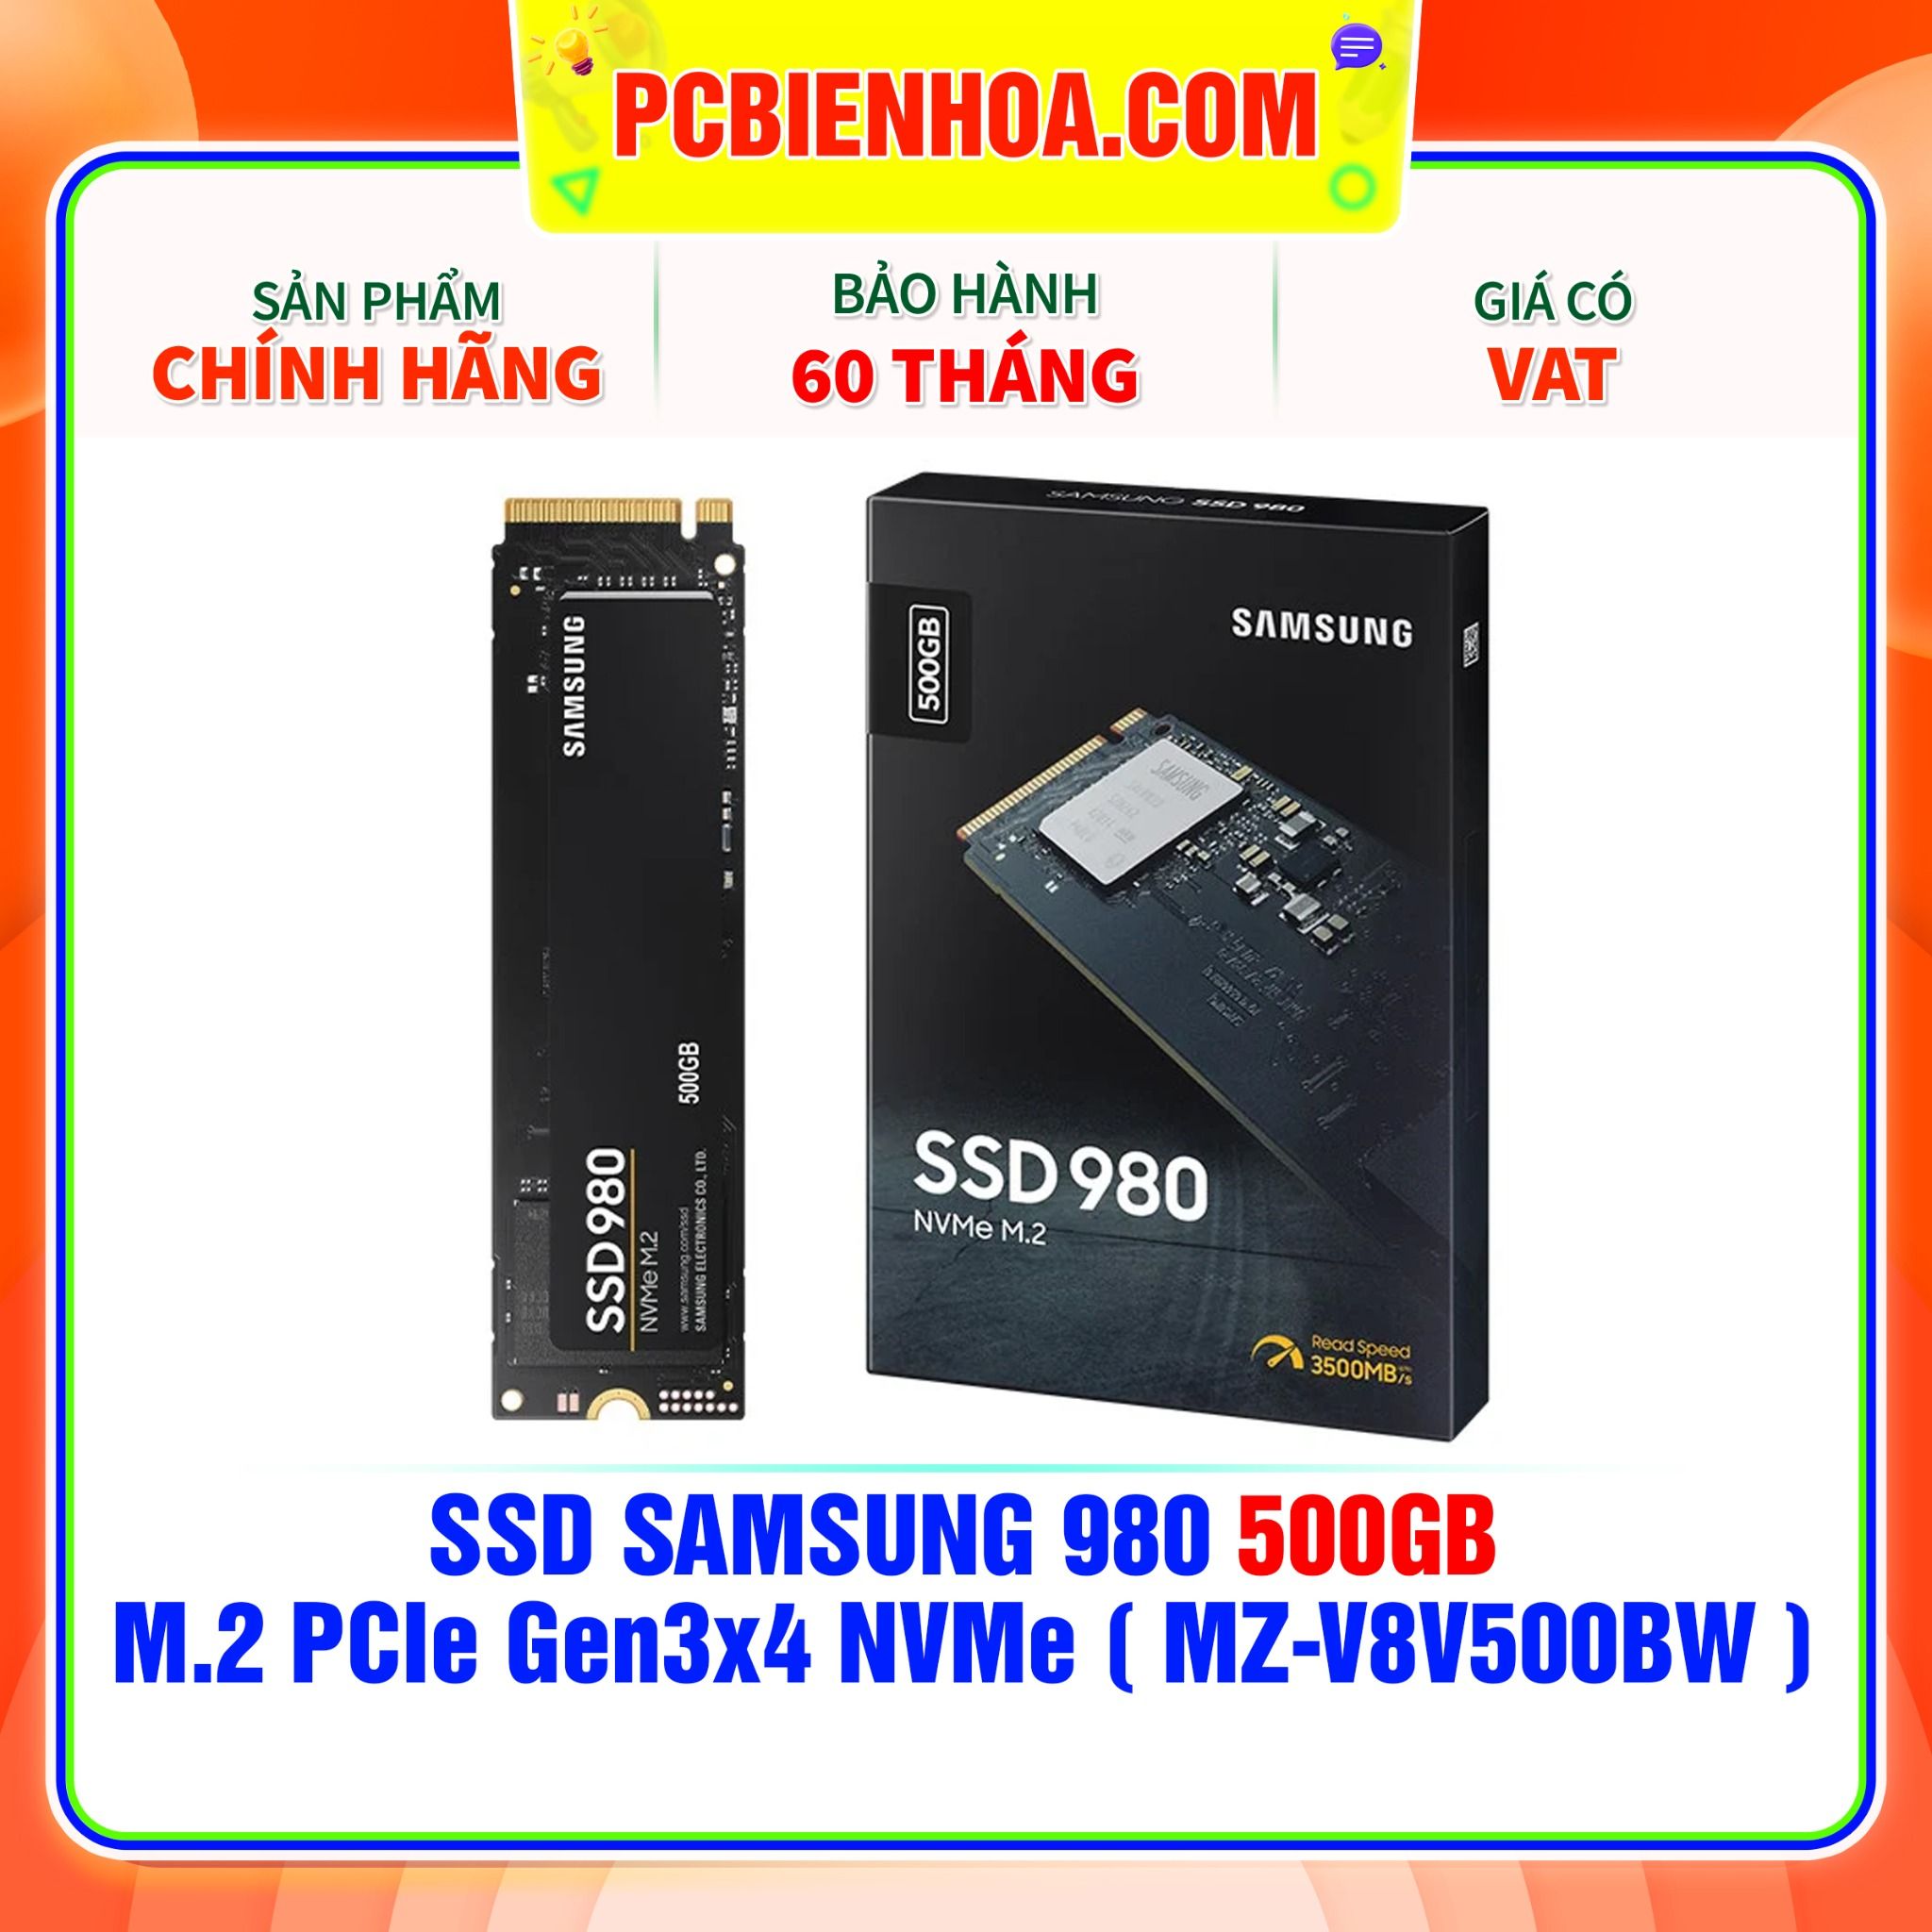  SSD SAMSUNG 980 500GB - M.2 PCIe Gen3x4 NVMe ( MZ-V8V500BW ) 